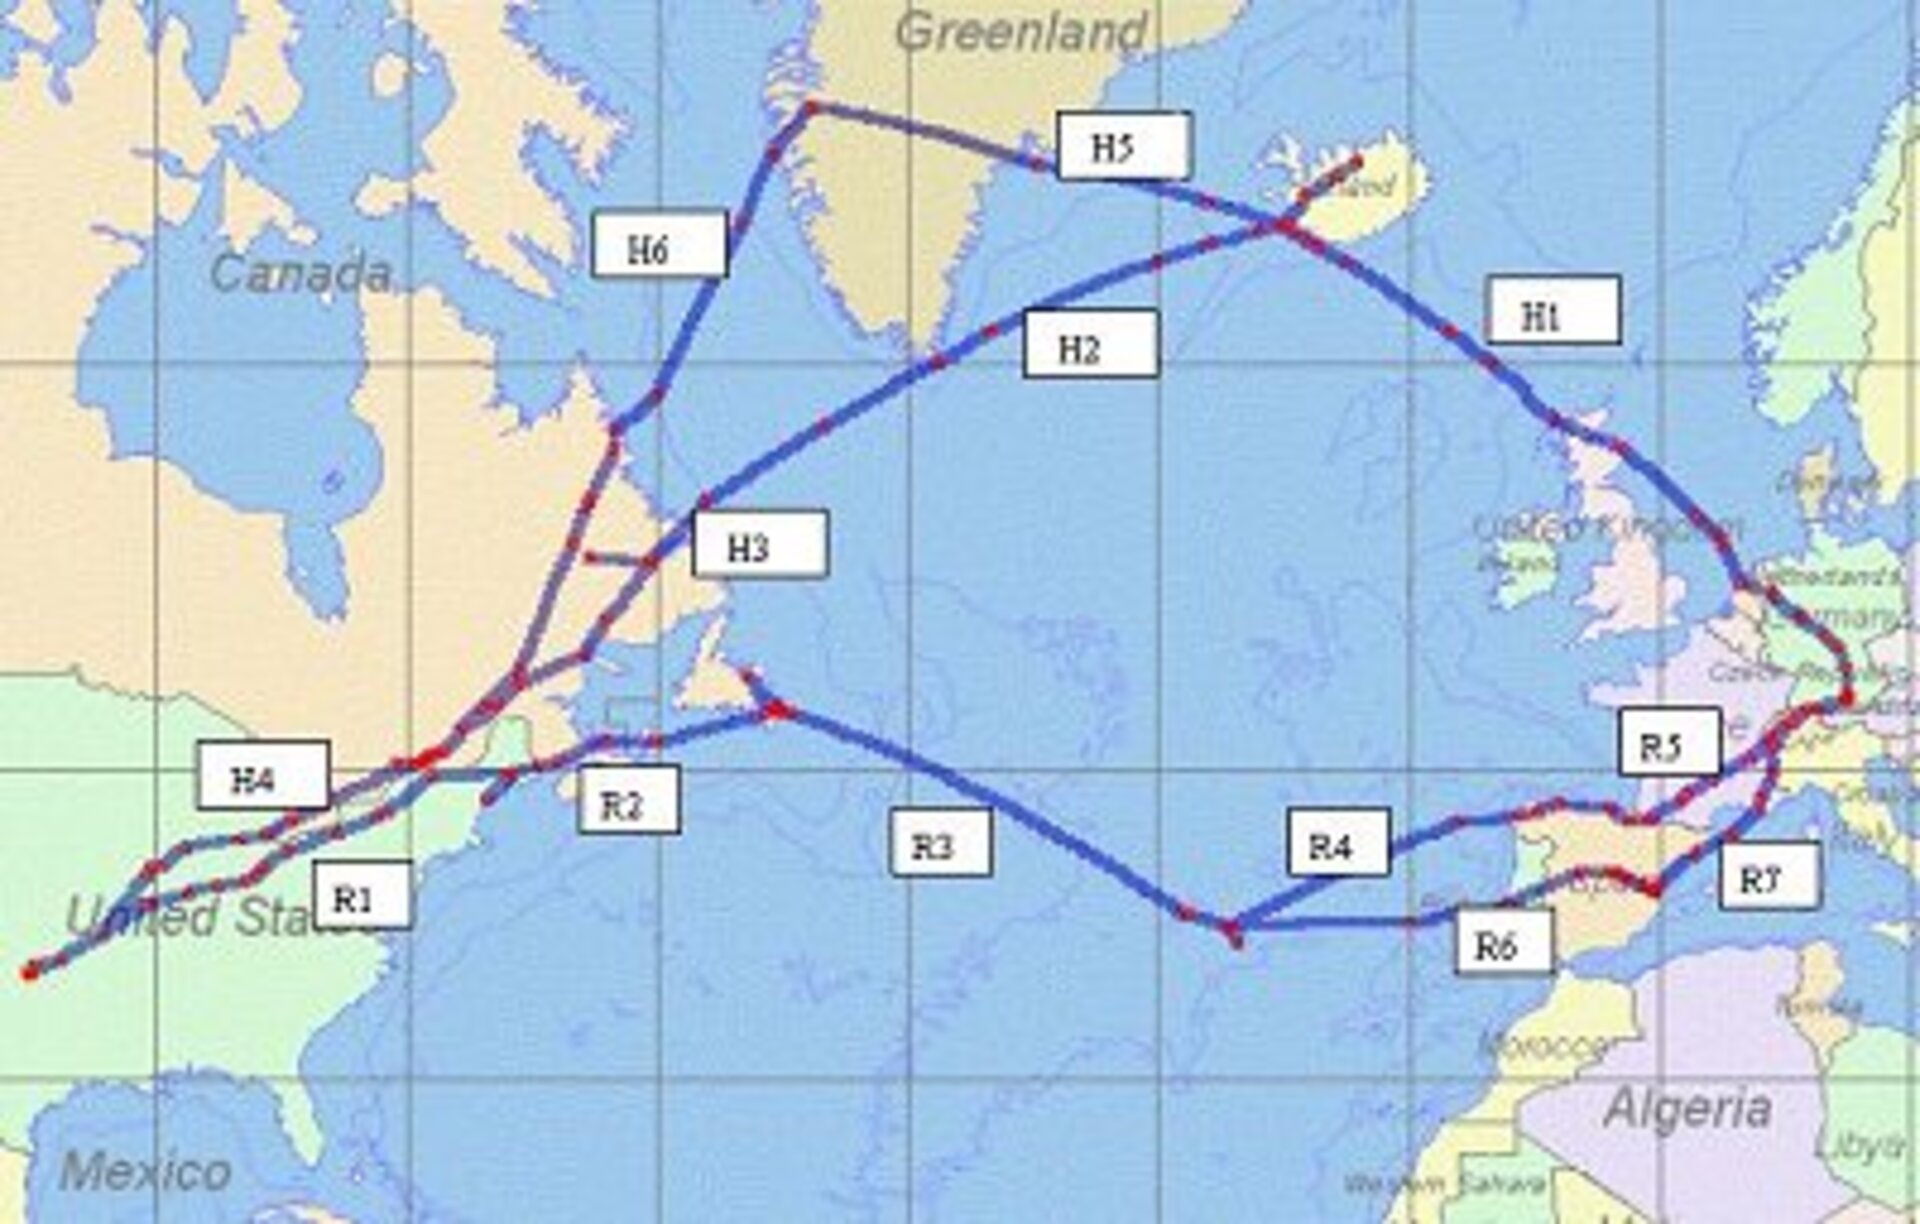 Flight paths across the Atlantic